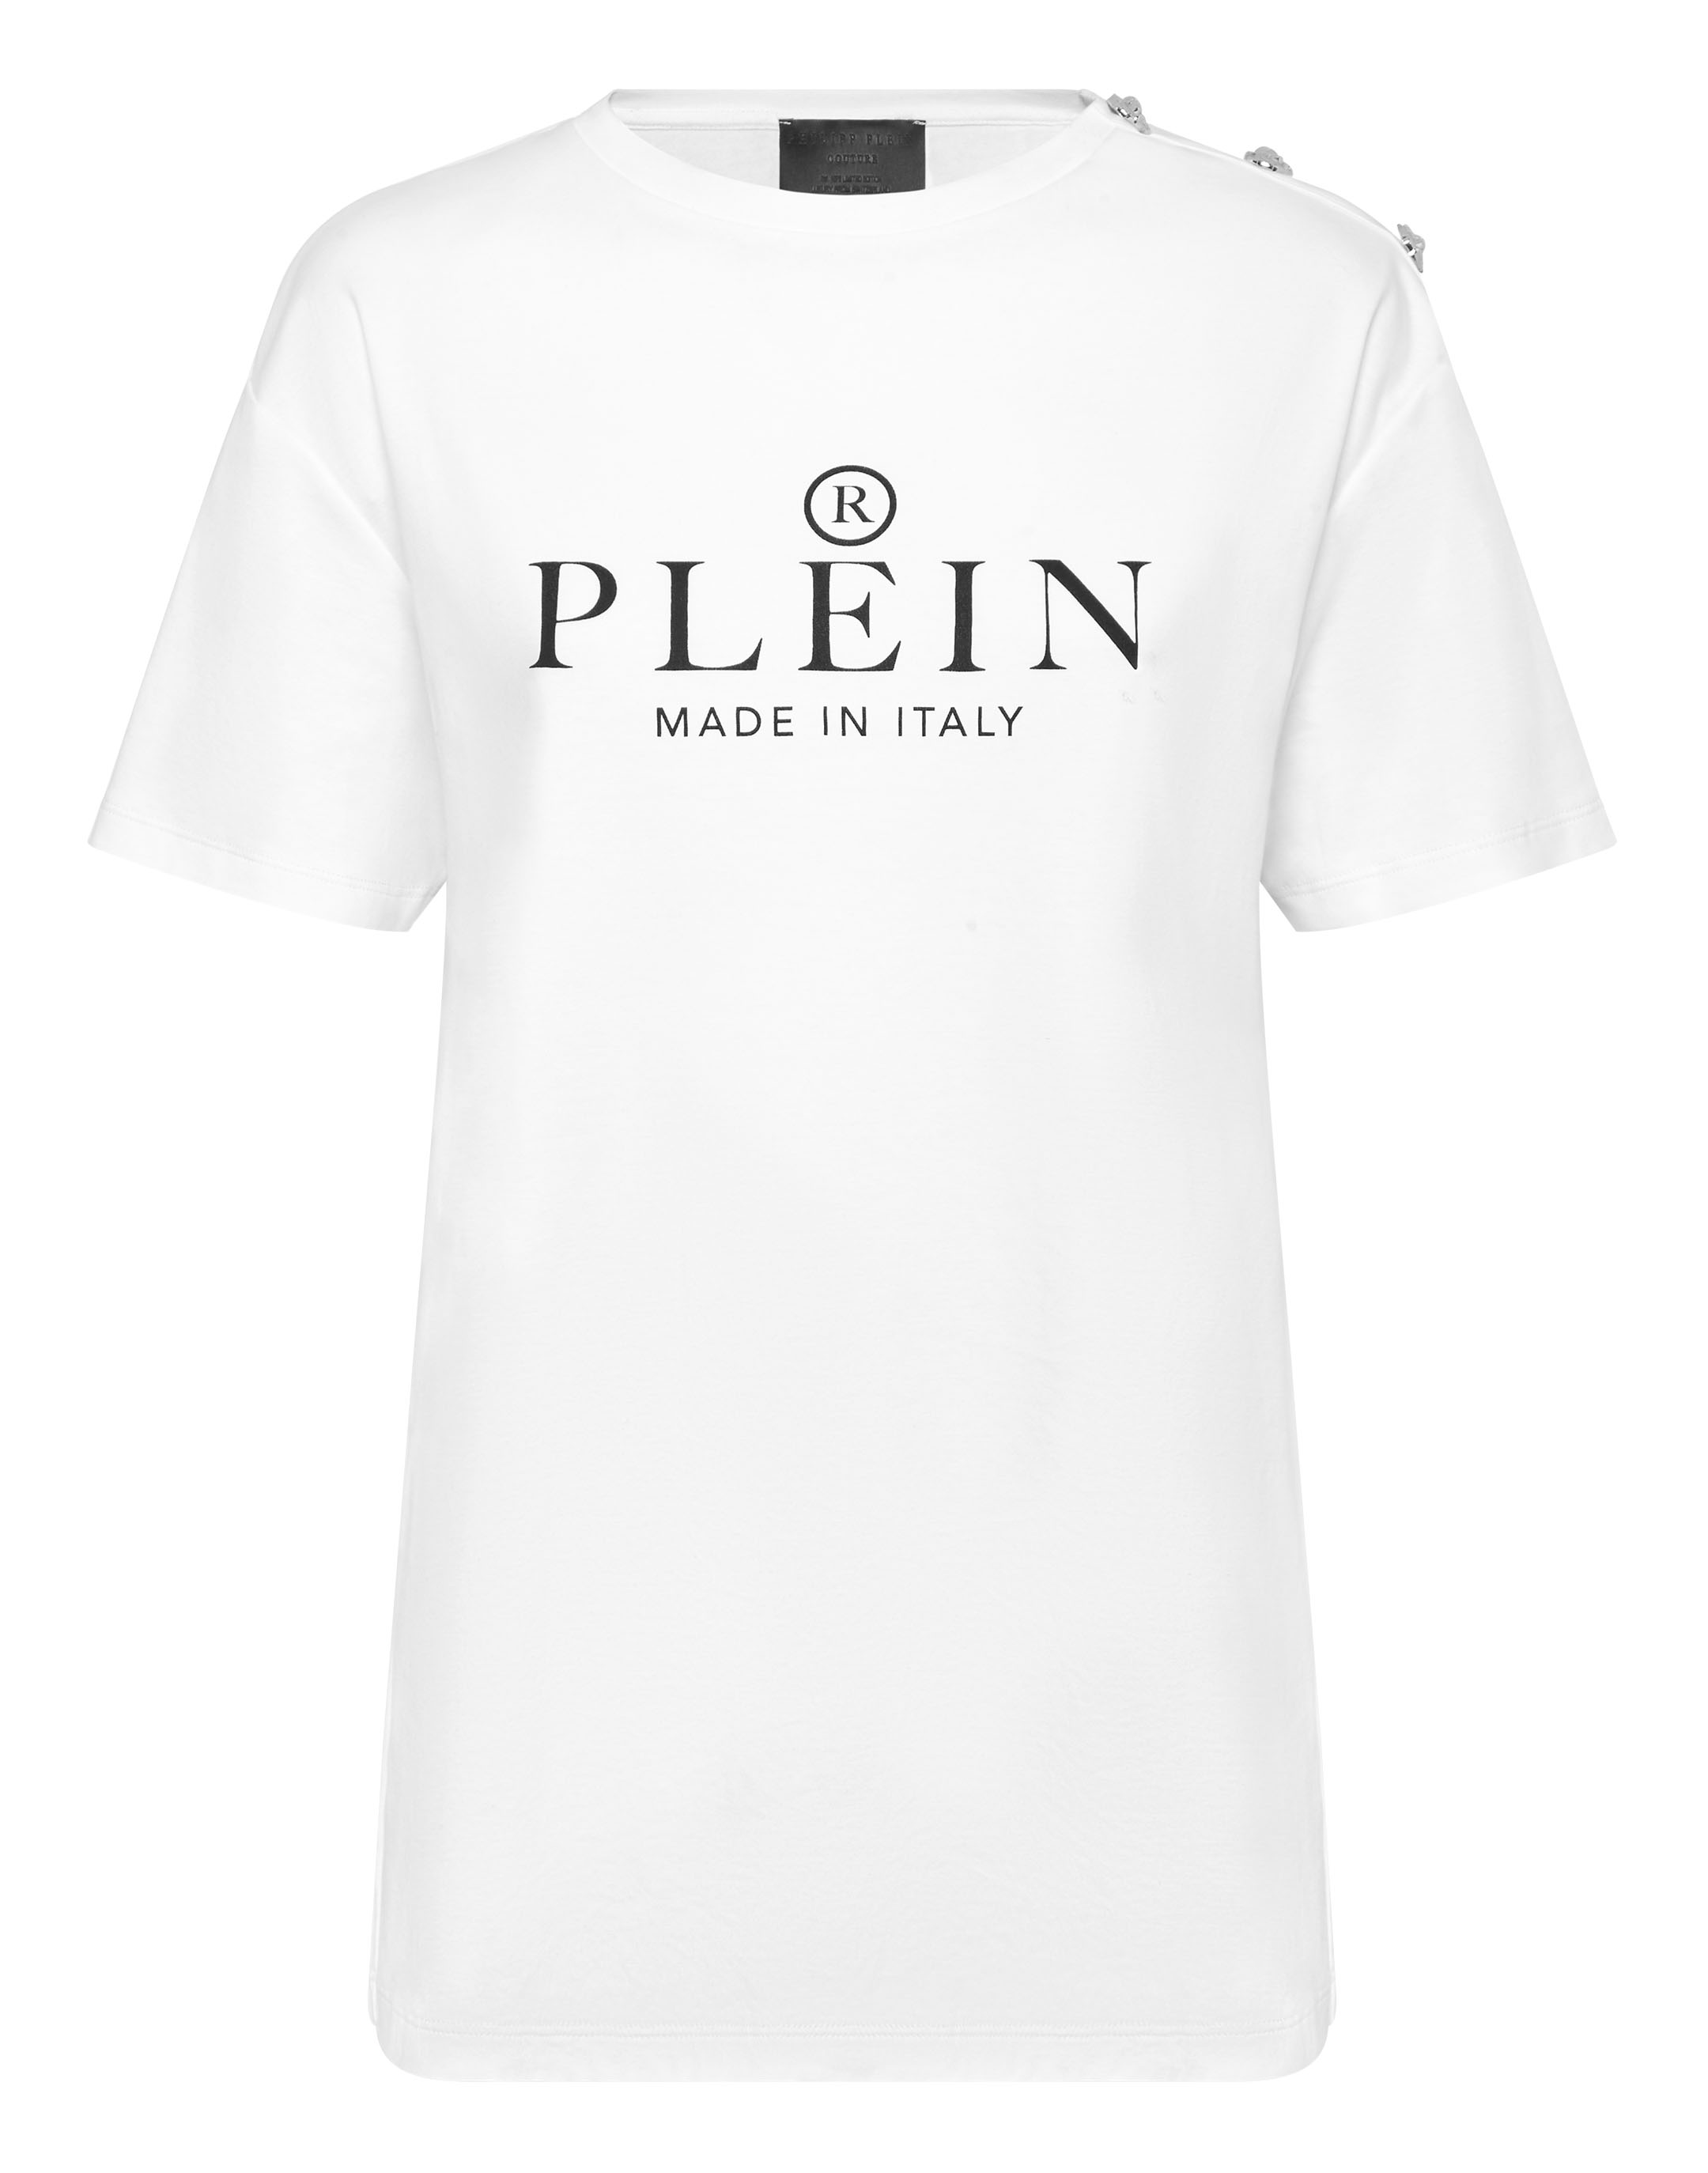 T-shirt Man Fit Philipp Plein TM | Philipp Plein